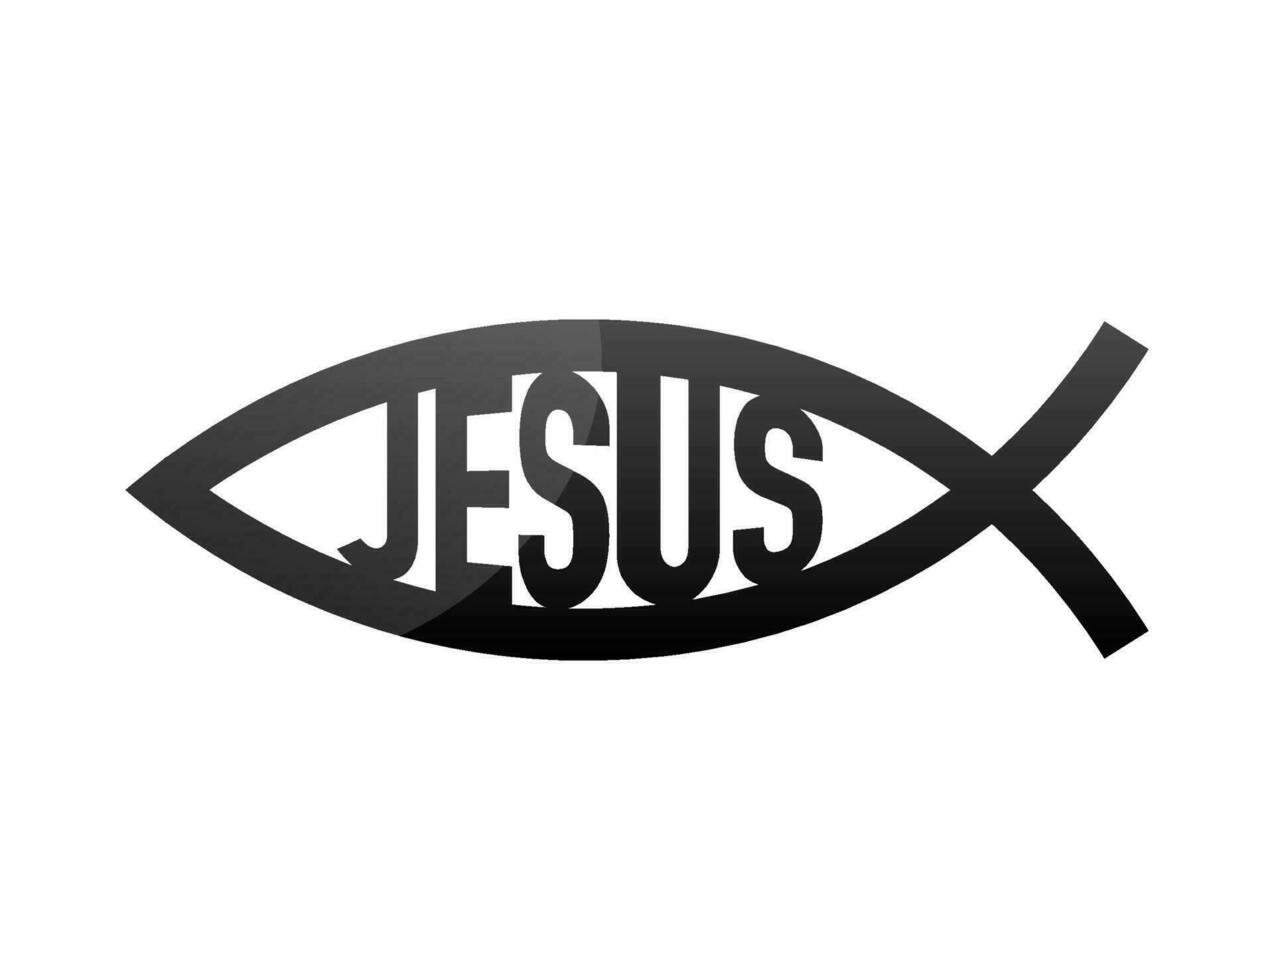 Christian symbole Ichthys, Jésus poisson. vecteur Stock illustration